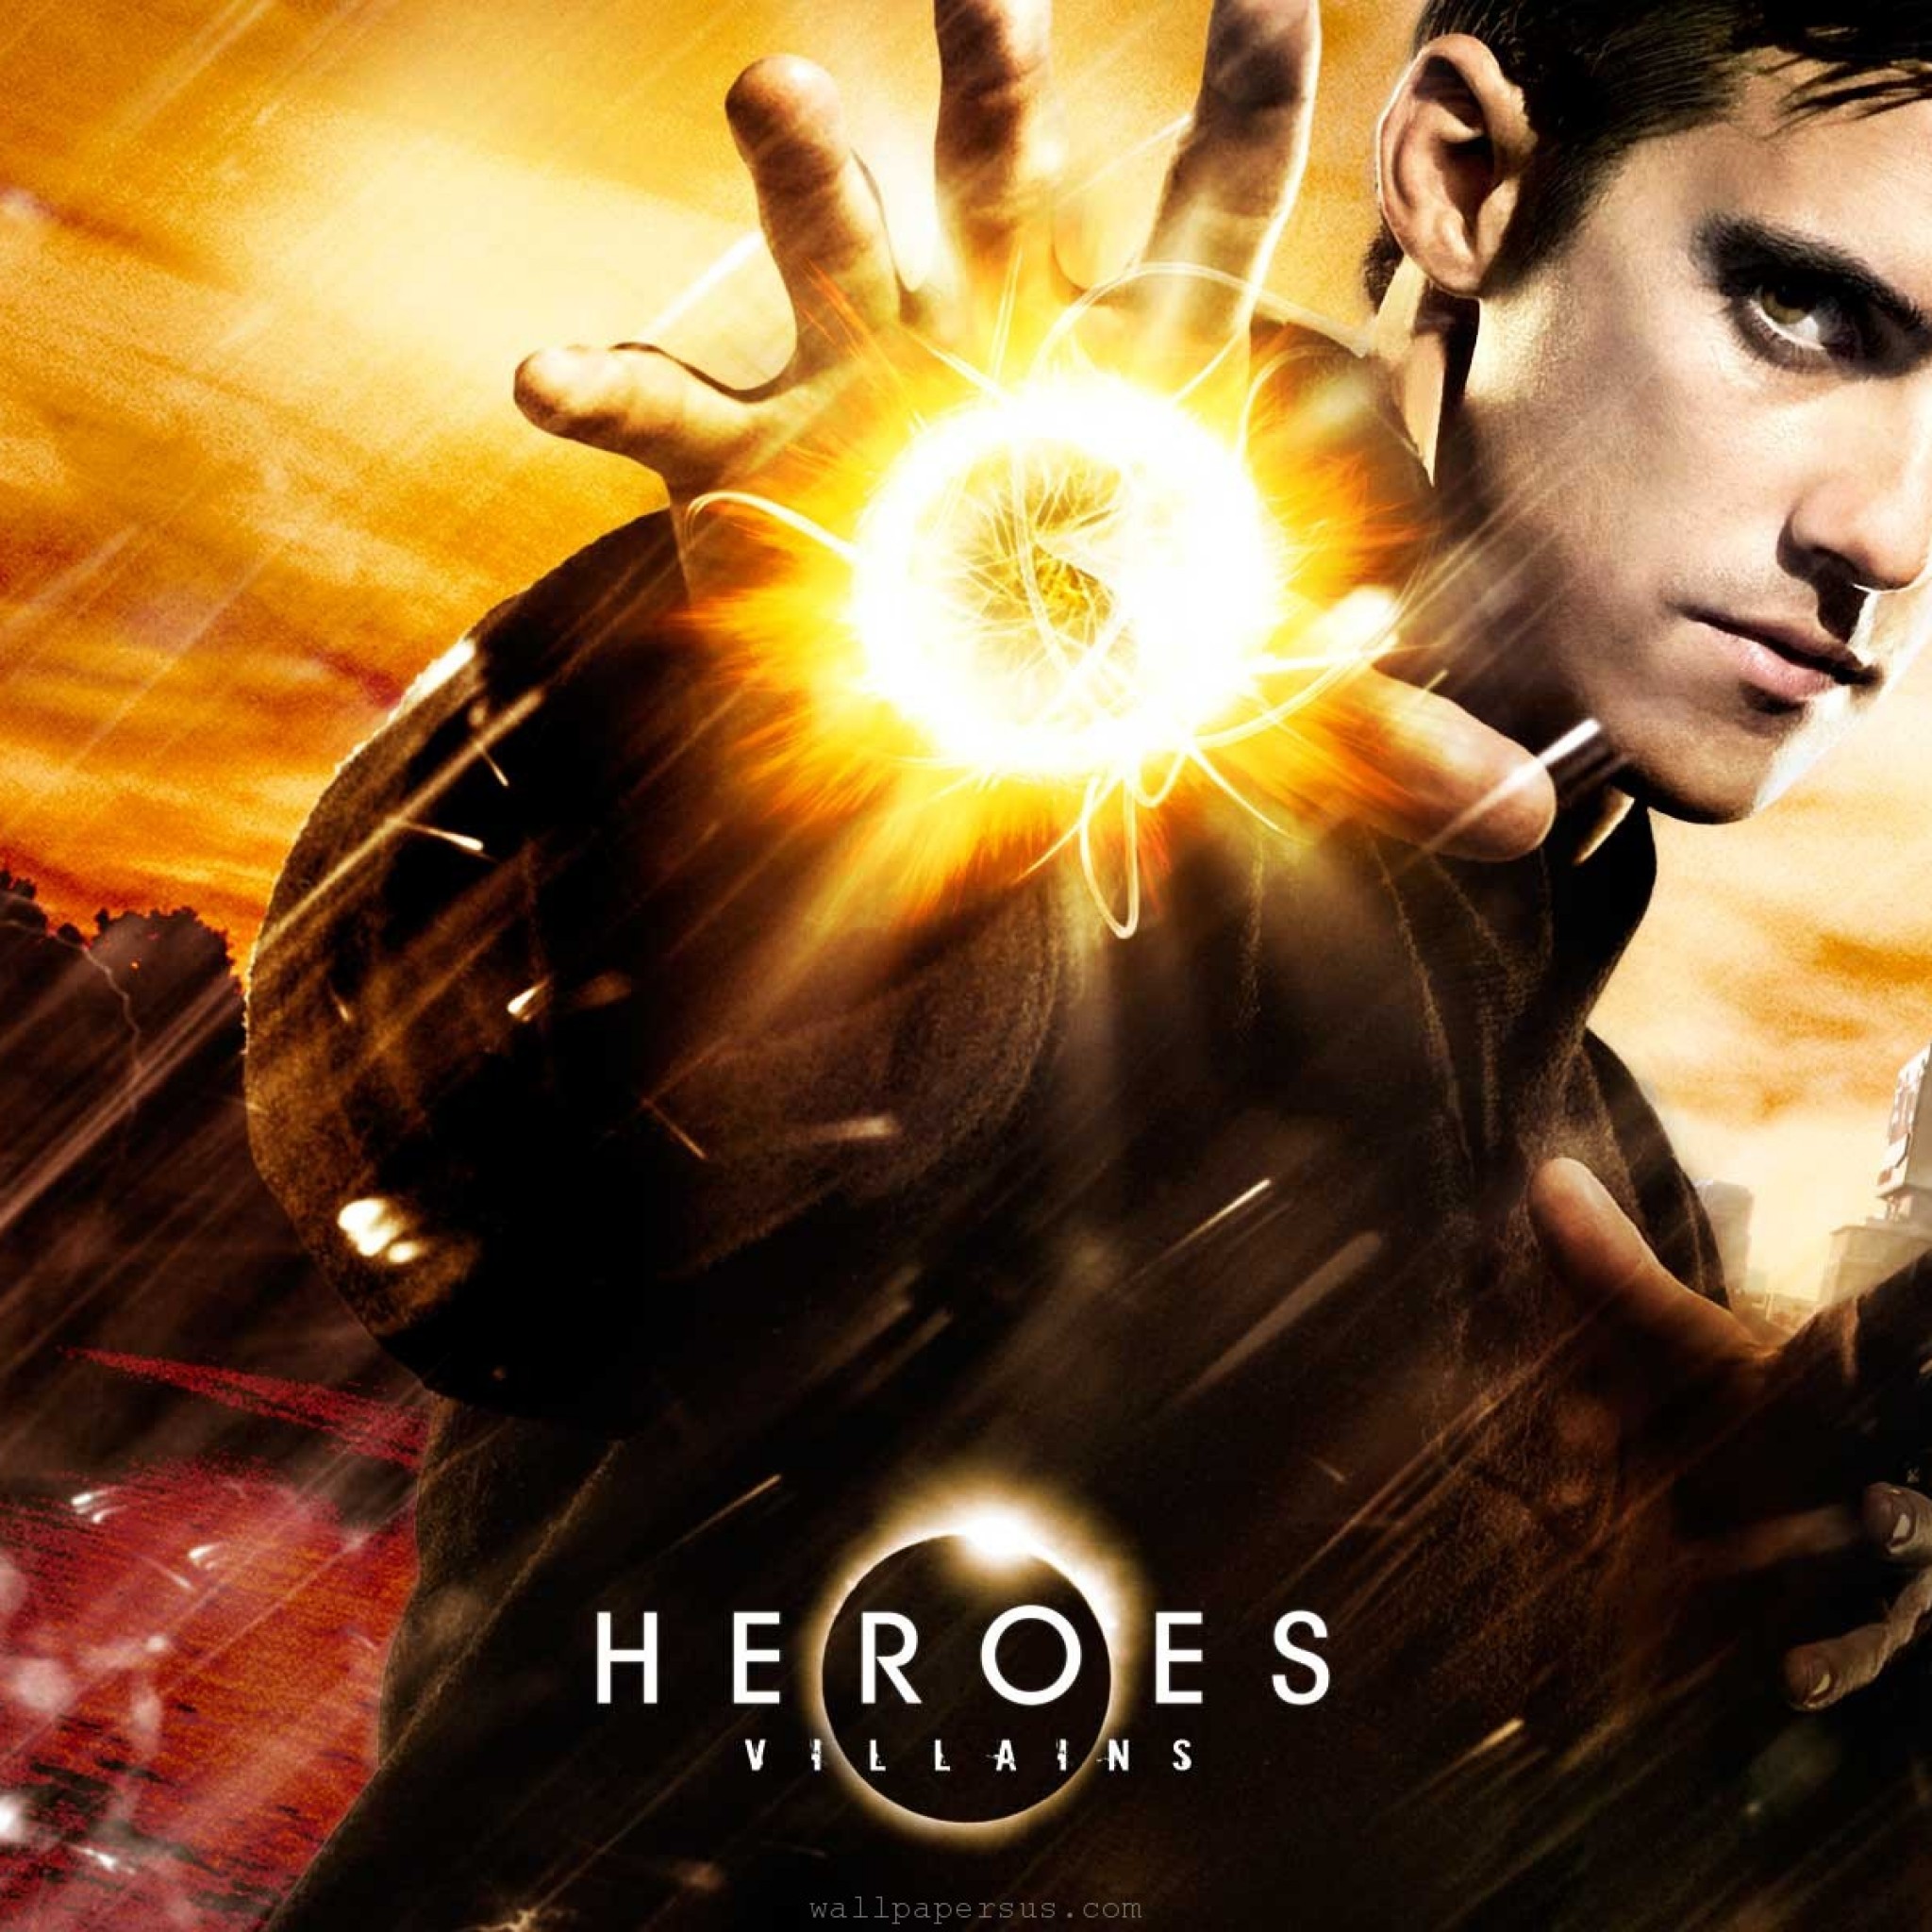 Season 3 Heroes Wallpaper Peter Movie Wallpapersus Com Ipad タブレット壁紙 ギャラリー